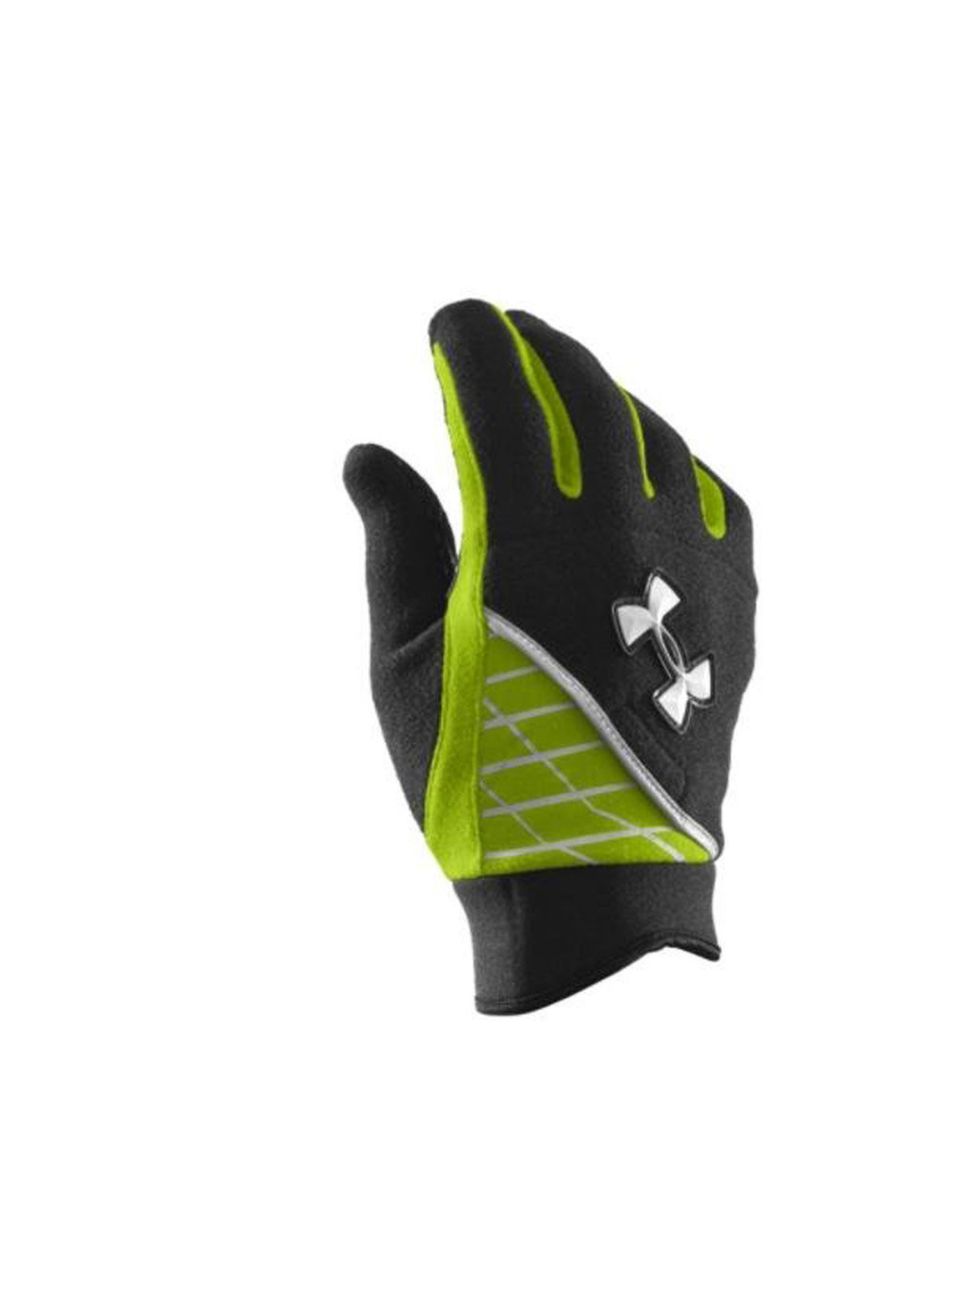 <p>Under Armour Fleece Glove , £19.99 at <a href="http://www.milletsports.co.uk/running/accessories/gloves/under-armour-fleece-glove/?utm_source=googleshopping&amp;utm_medium=organic&amp;gclid=CIqQnJzT6bsCFTHLtAodikoAzw">Millet Sports</a></p><p>Gloves tha